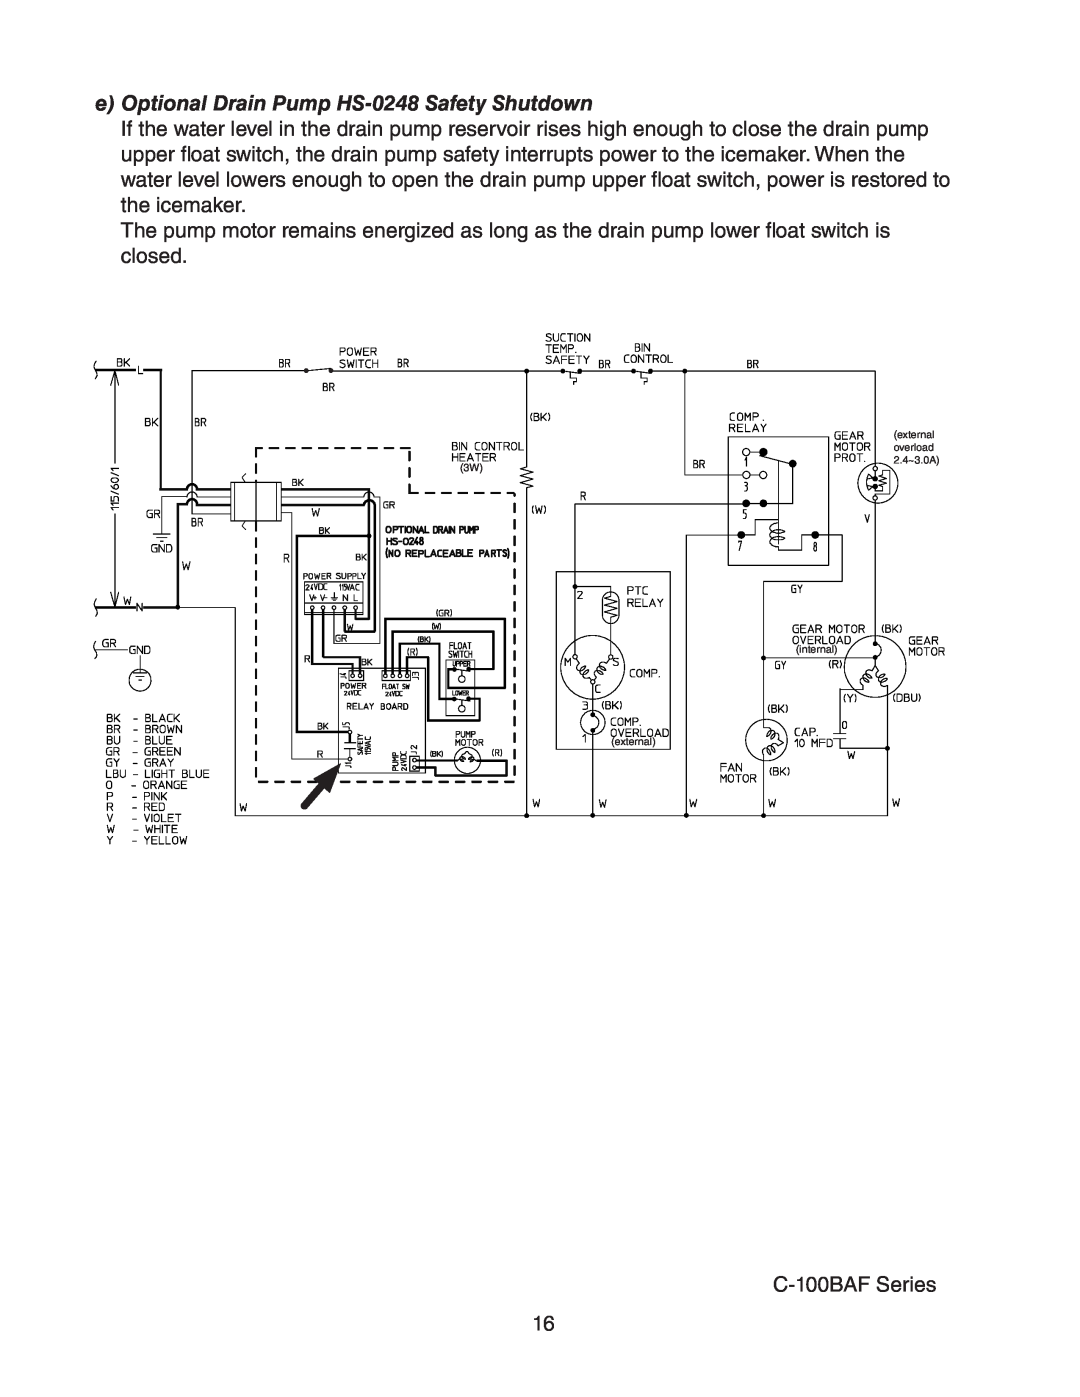 Hoshizaki C-100BAF-ADDS service manual eOptional Drain Pump HS-0248Safety Shutdown 